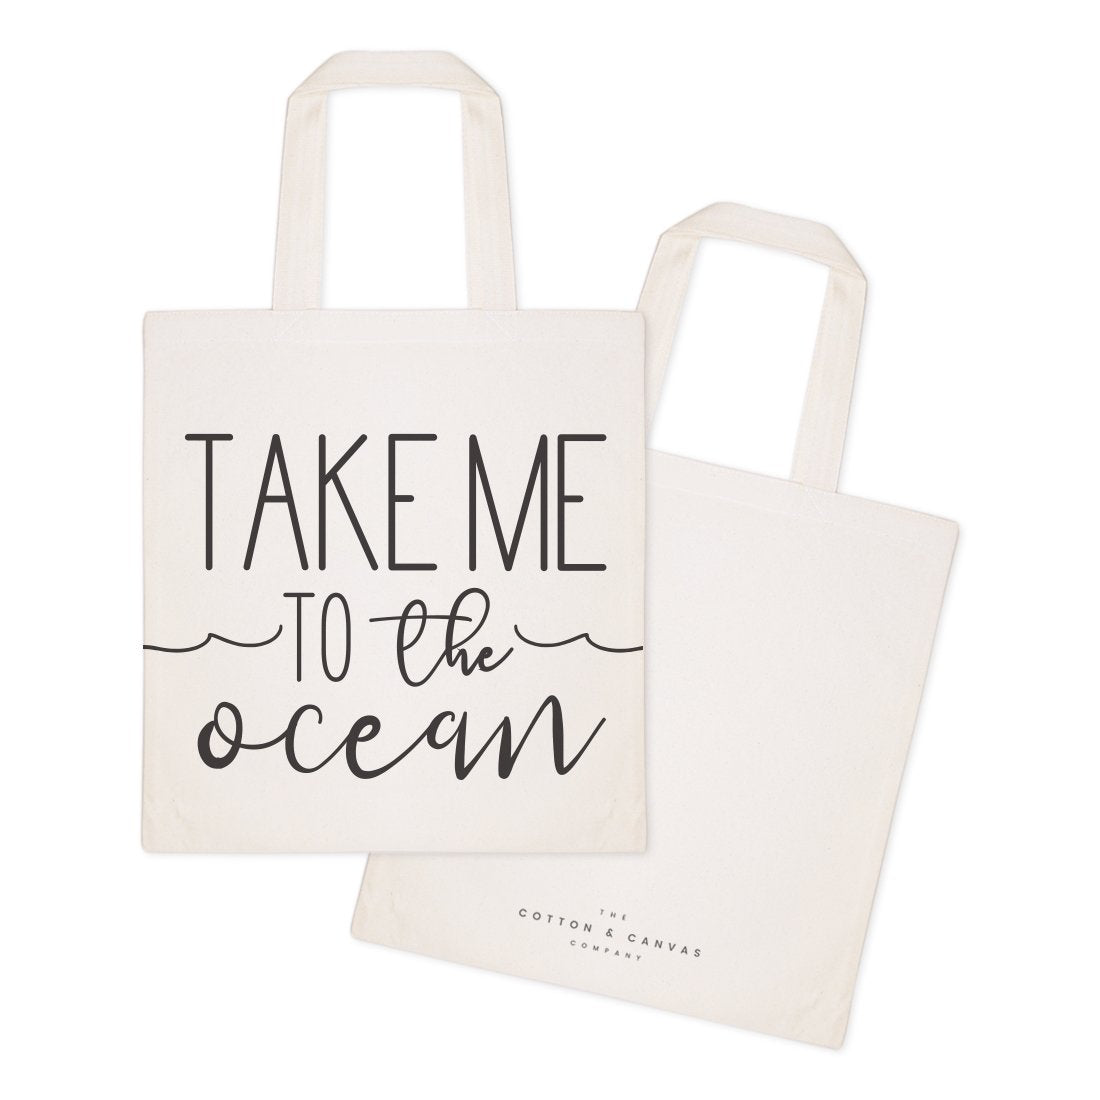 Take Me to the Ocean Cotton Canvas Tote Bag - Saltwater Bodega